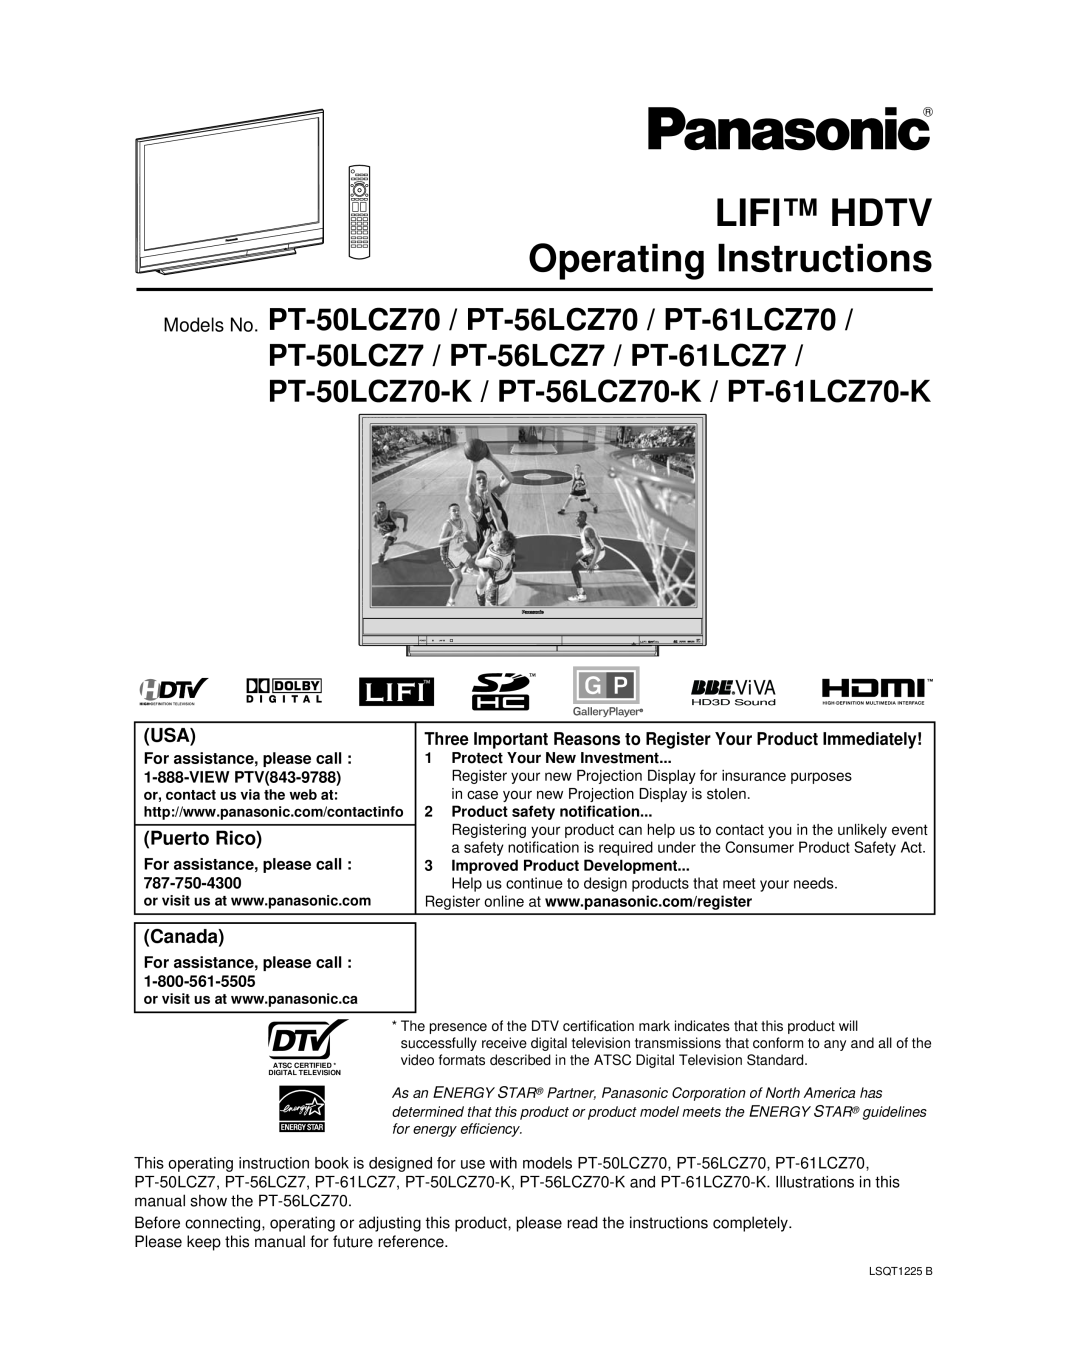 Panasonic PT-50LCZ70 operating instructions Puerto Rico, Canada, LIFI HDTV Operating Instructions, ViVA, VIEW PTV843-9788 